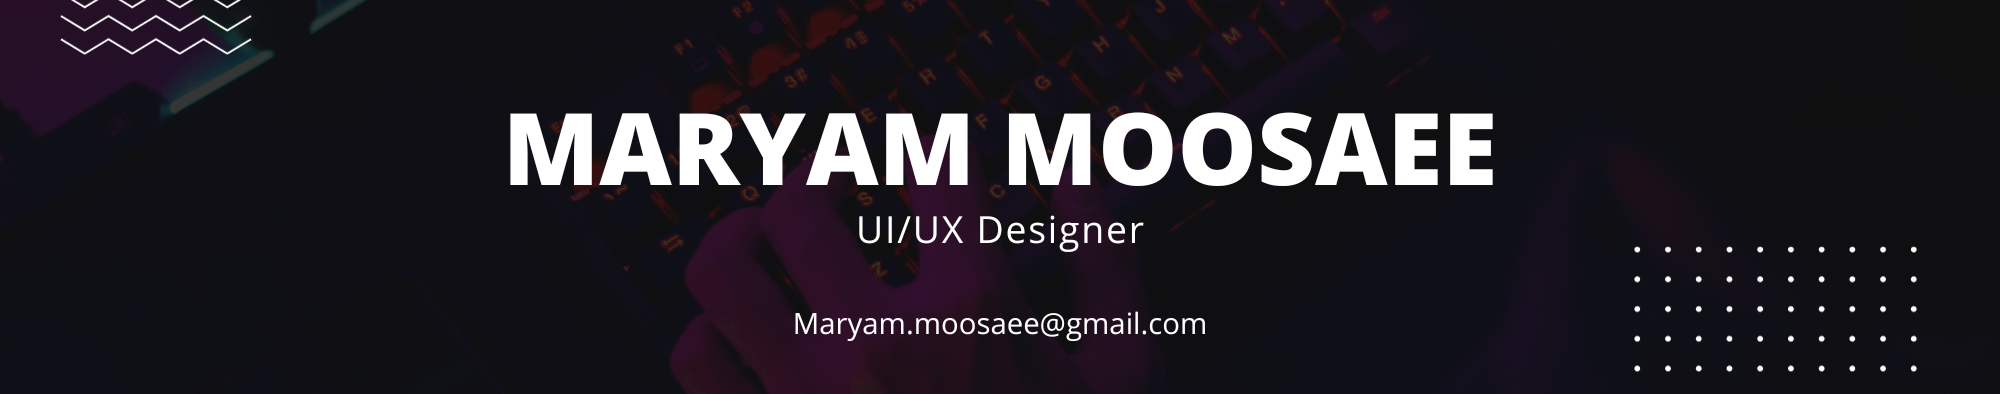 Maryam Moosaee's profile banner